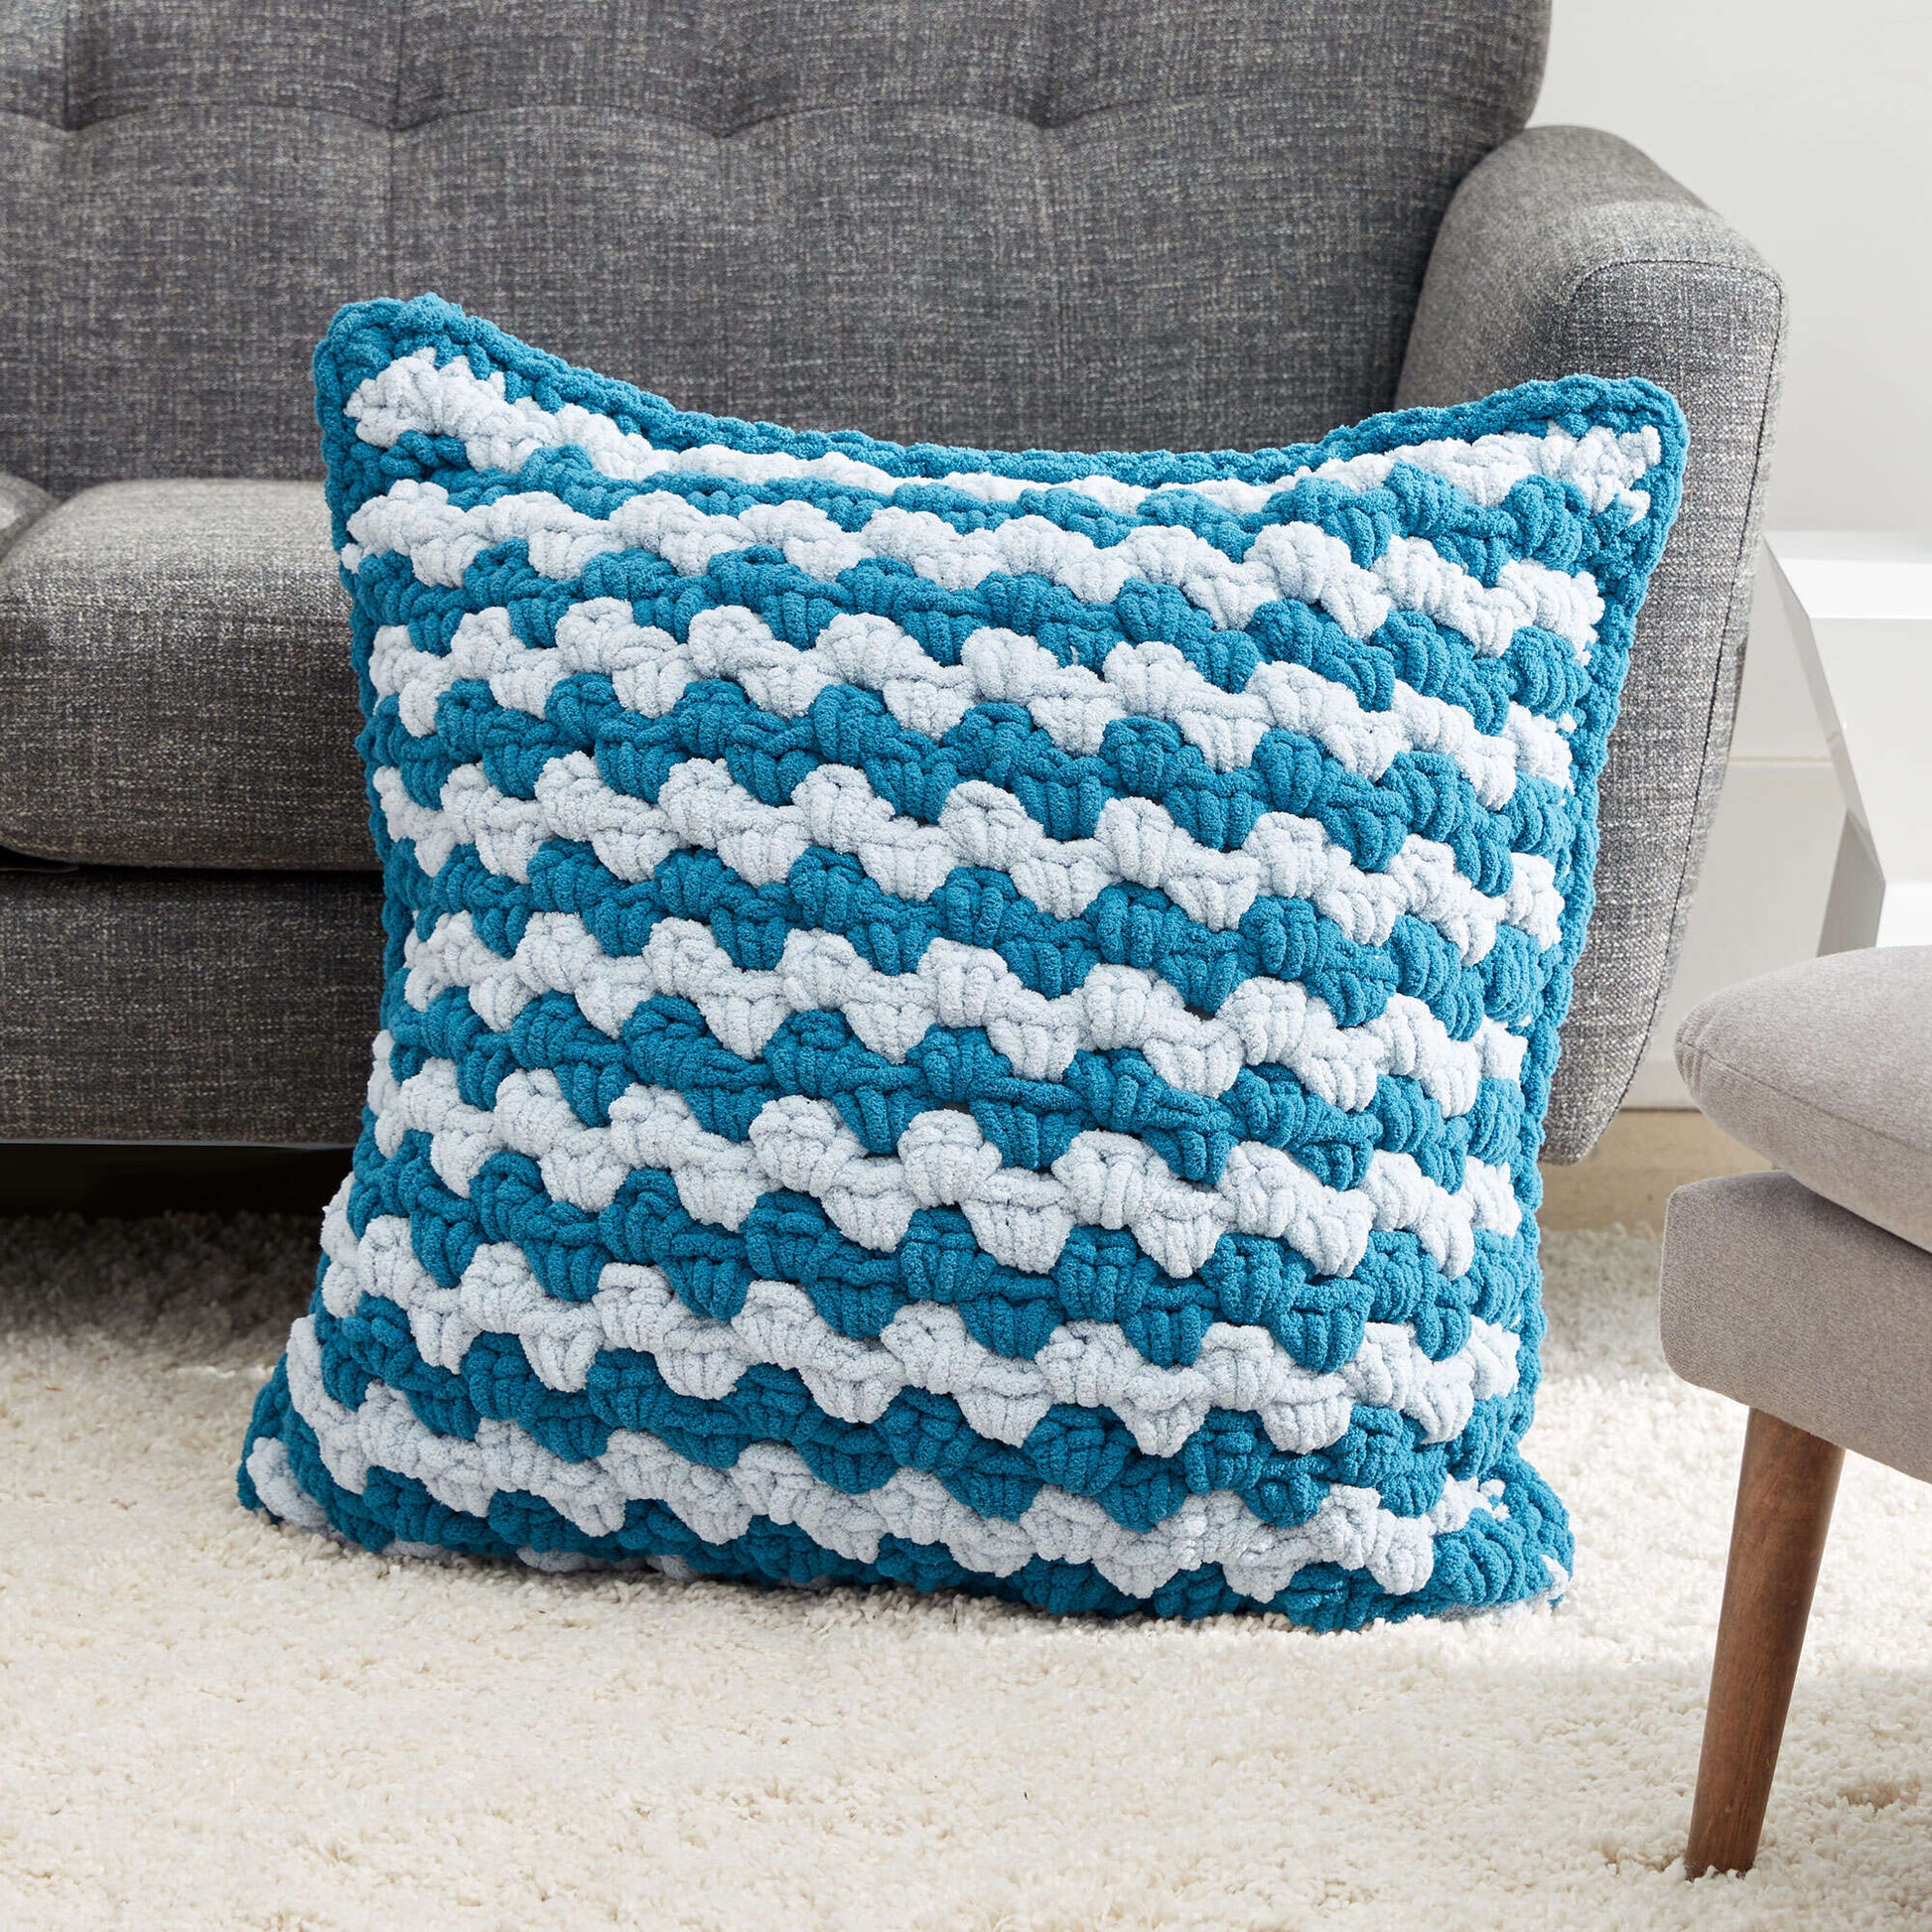 Free Bernat Granny Striped Crochet Floor Cushion Pattern